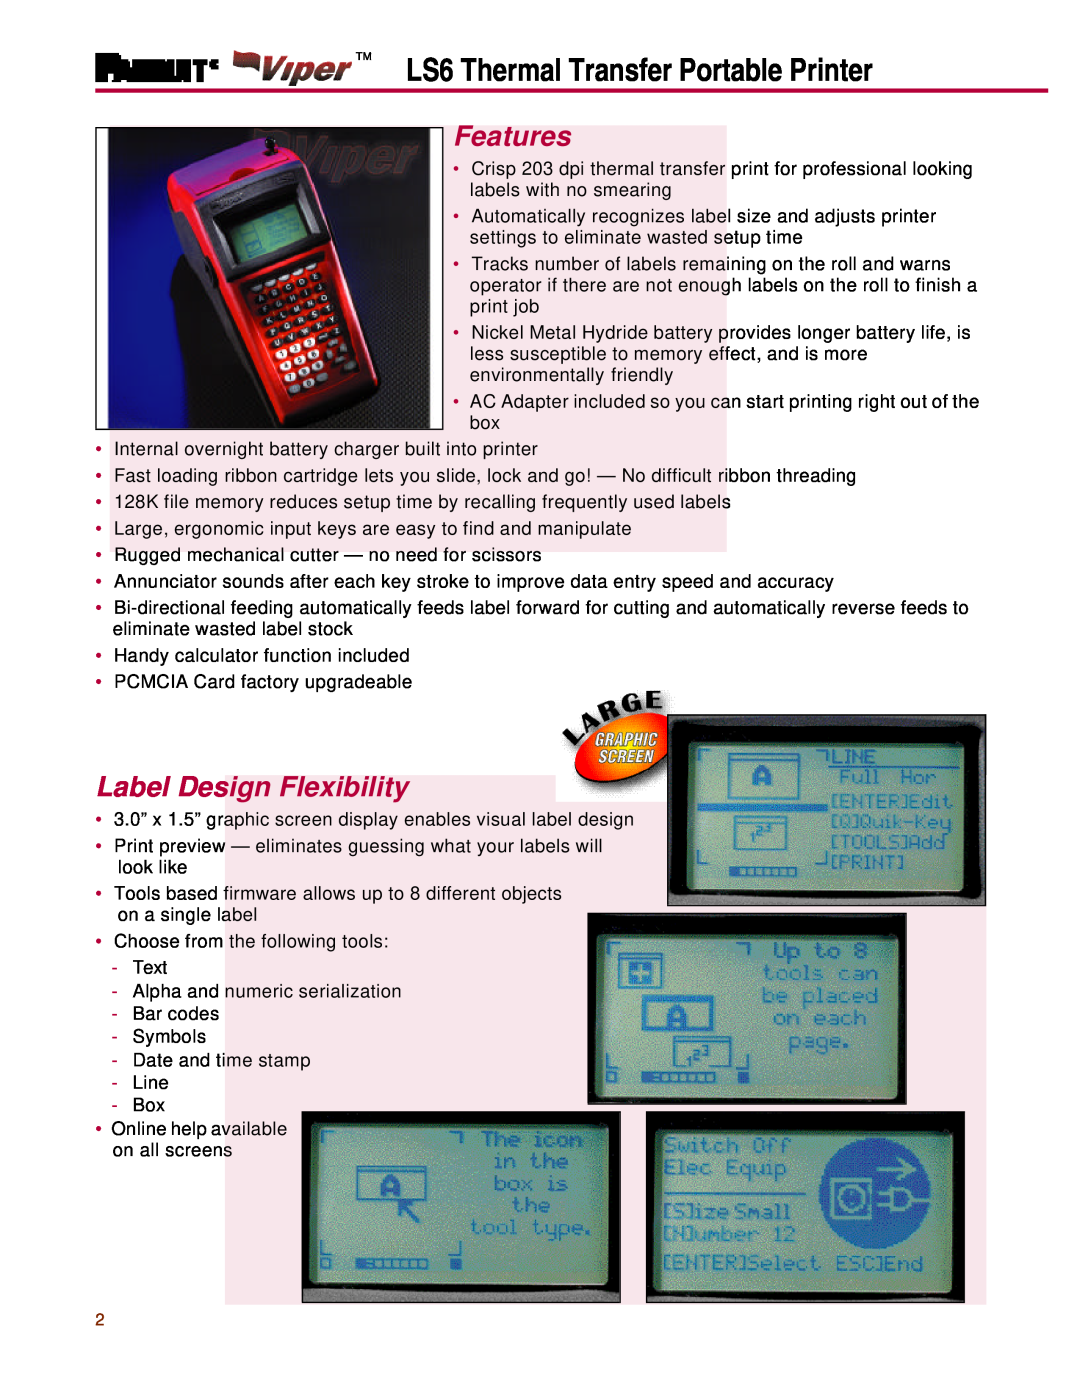 Panduit manual LS6 Thermal Transfer Portable Printer, Features, Label Design Flexibility 